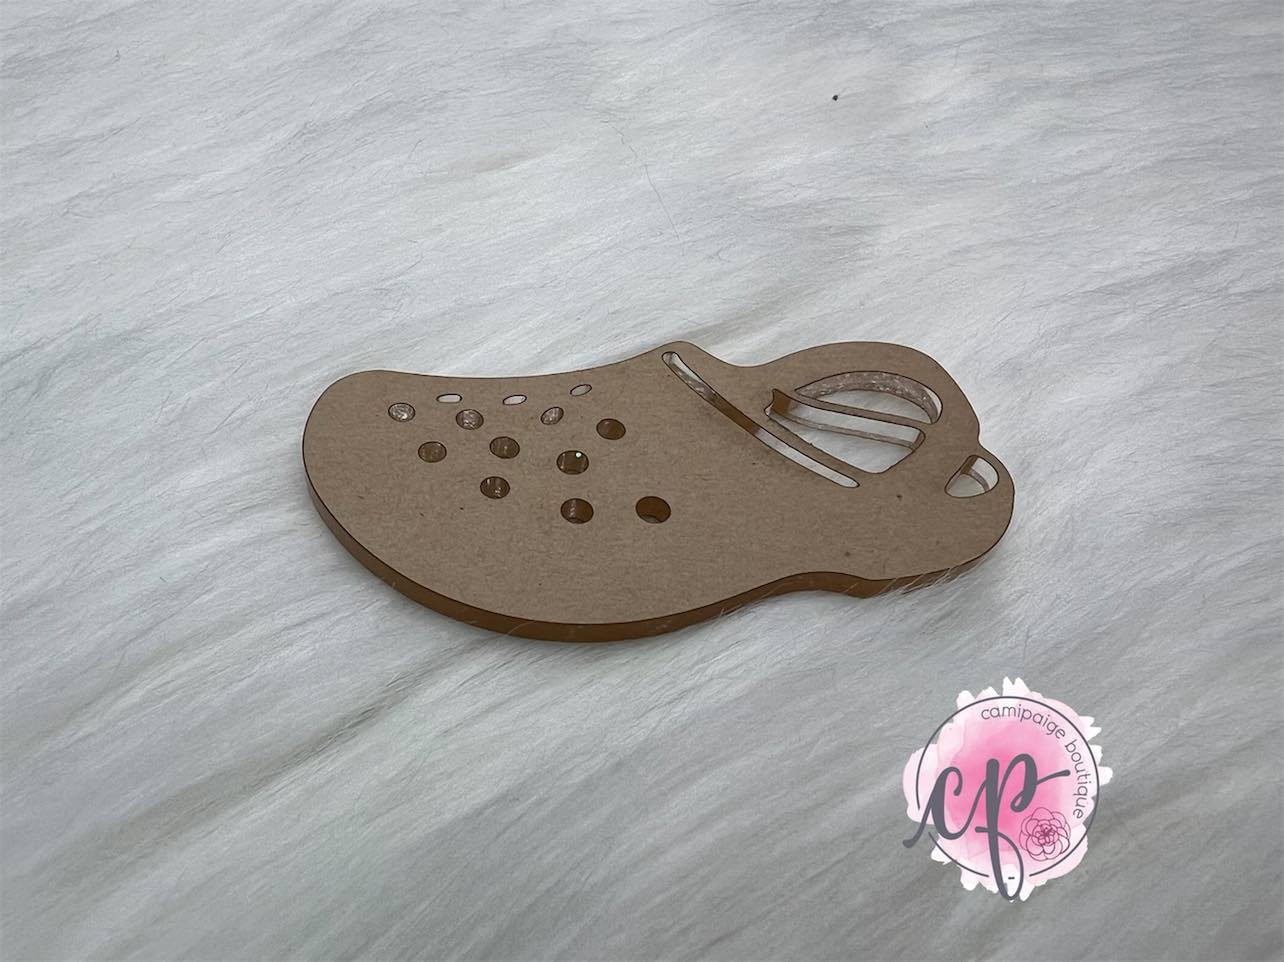 Foam Sandal 3" - Laser Cut Clear Acrylic Blank - CamiPaige Boutique